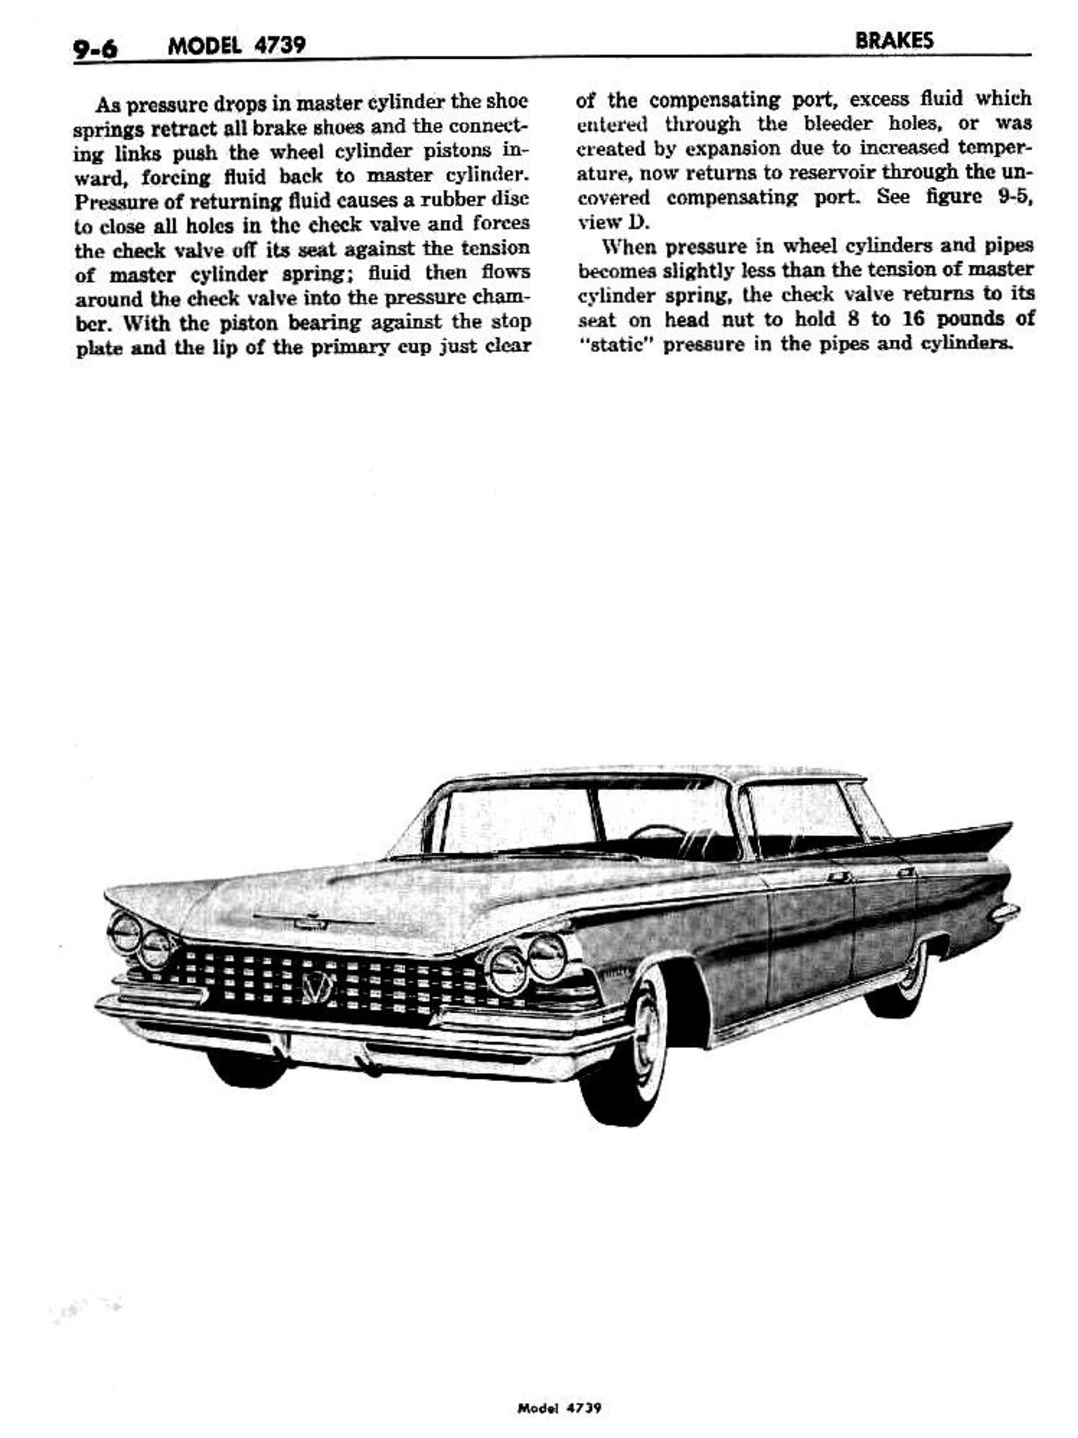 n_10 1959 Buick Shop Manual - Brakes-006-006.jpg